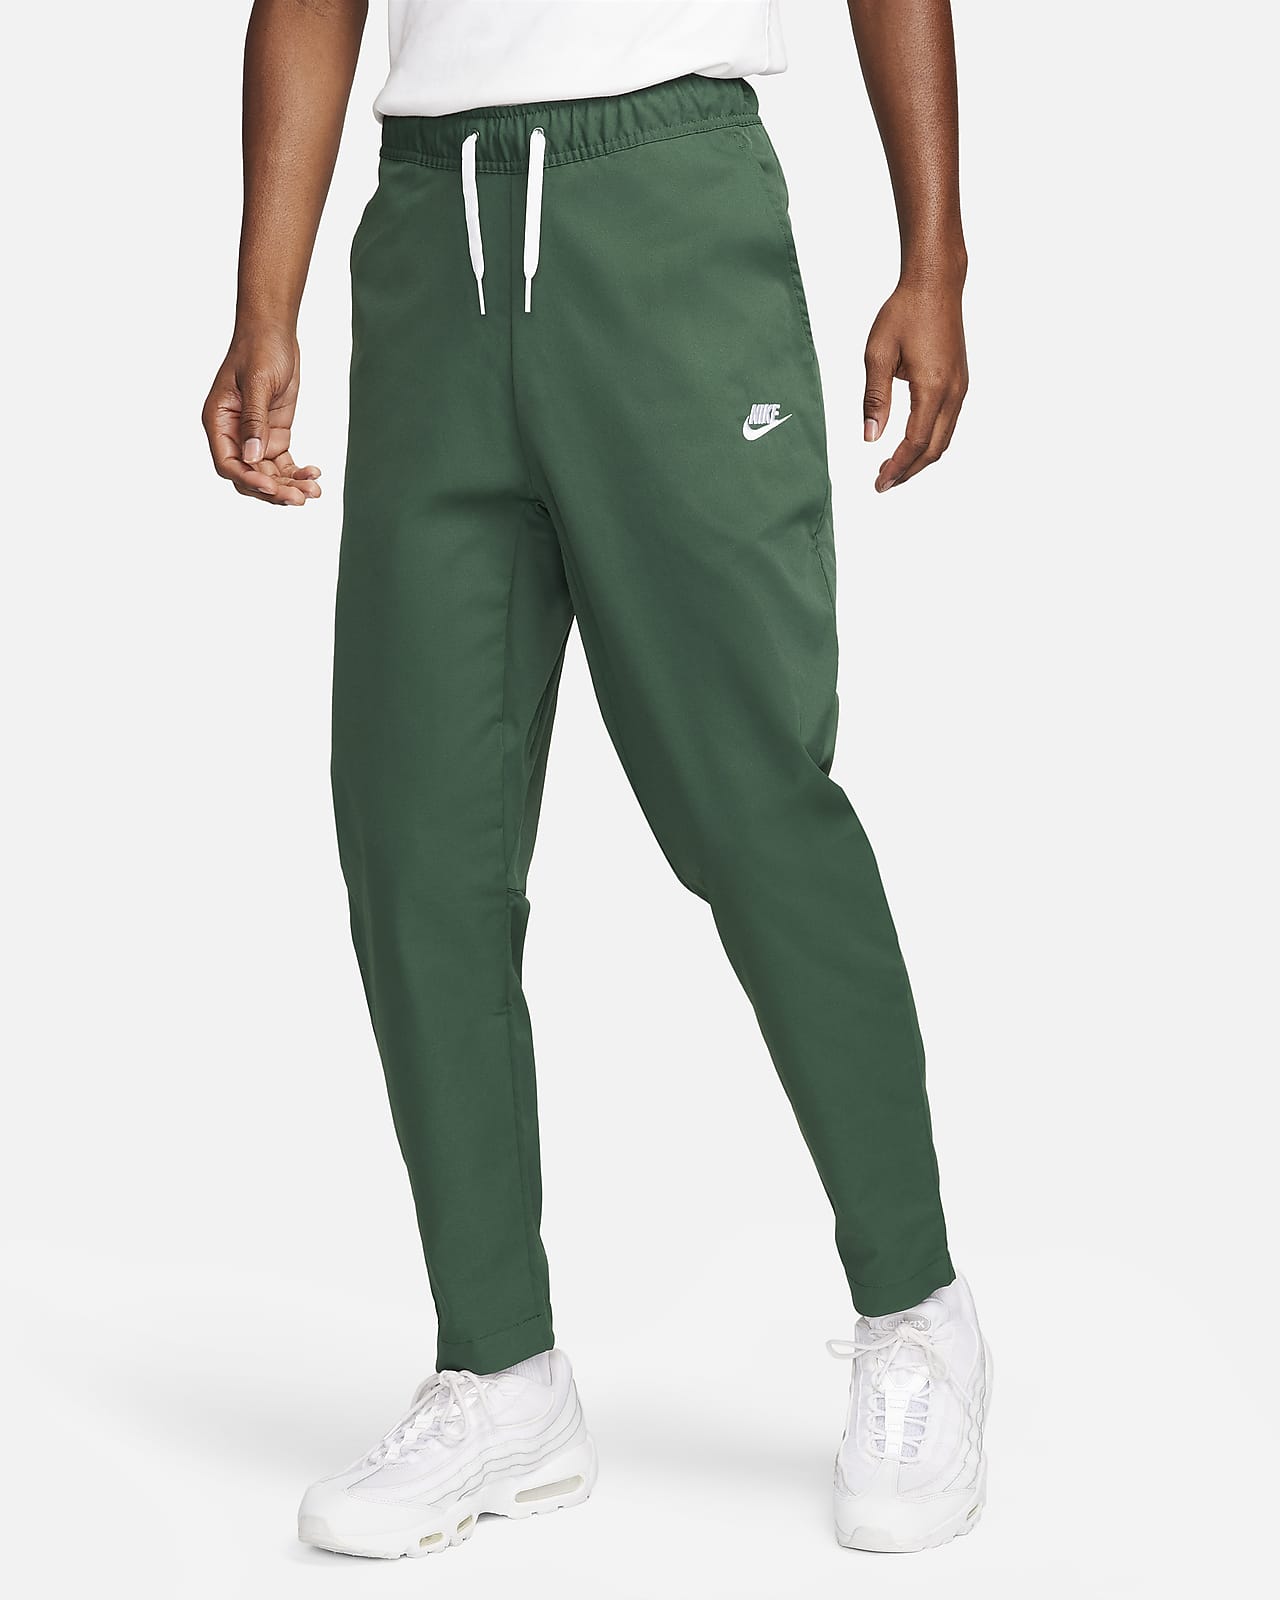 Nike SB Kearny Olive Cargo Pants | Zumiez